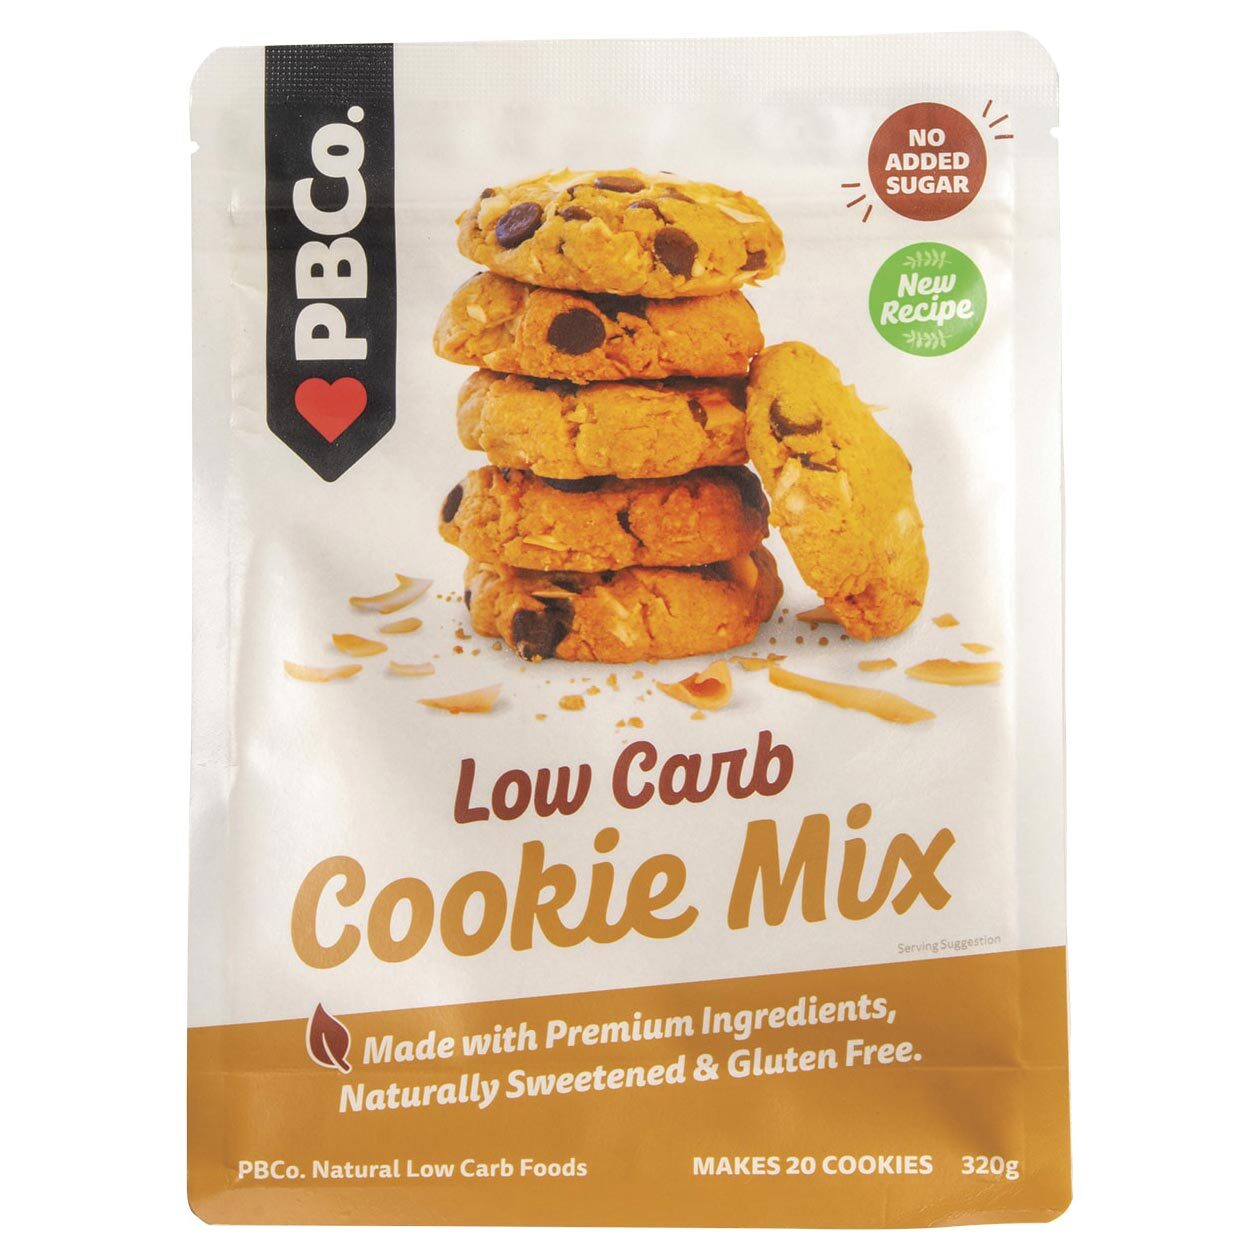 PBCO Low Carb Cookie Base Mix 320g